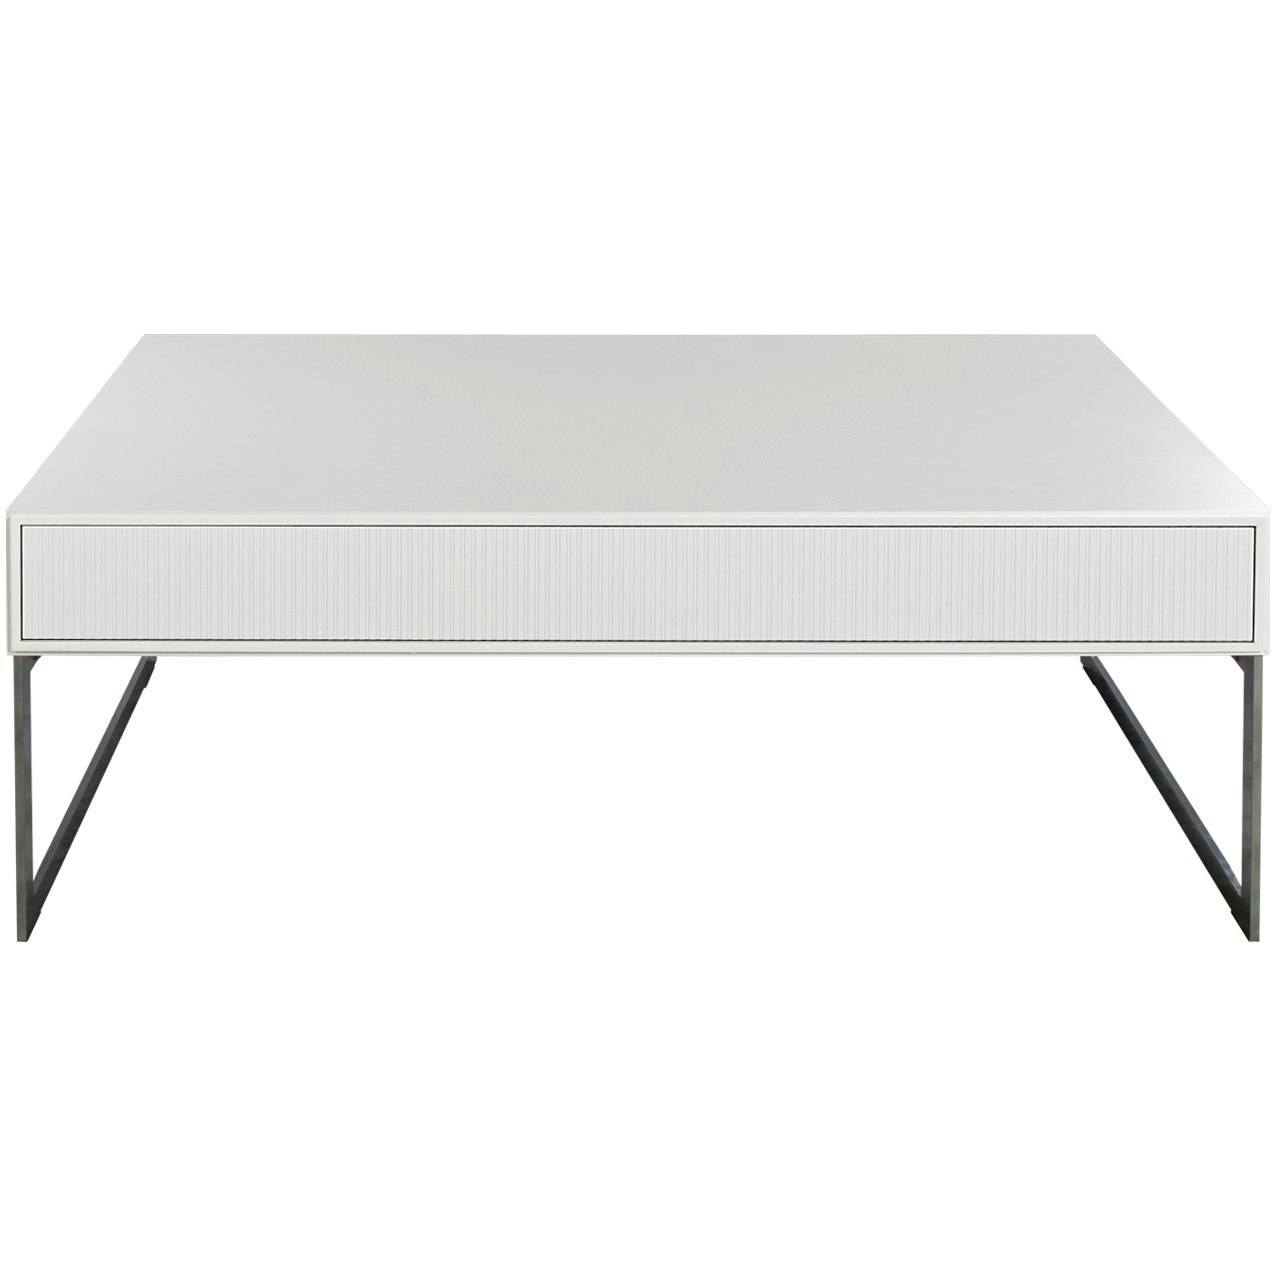 Line Coffee Table 70x130 cm, White / Chrome